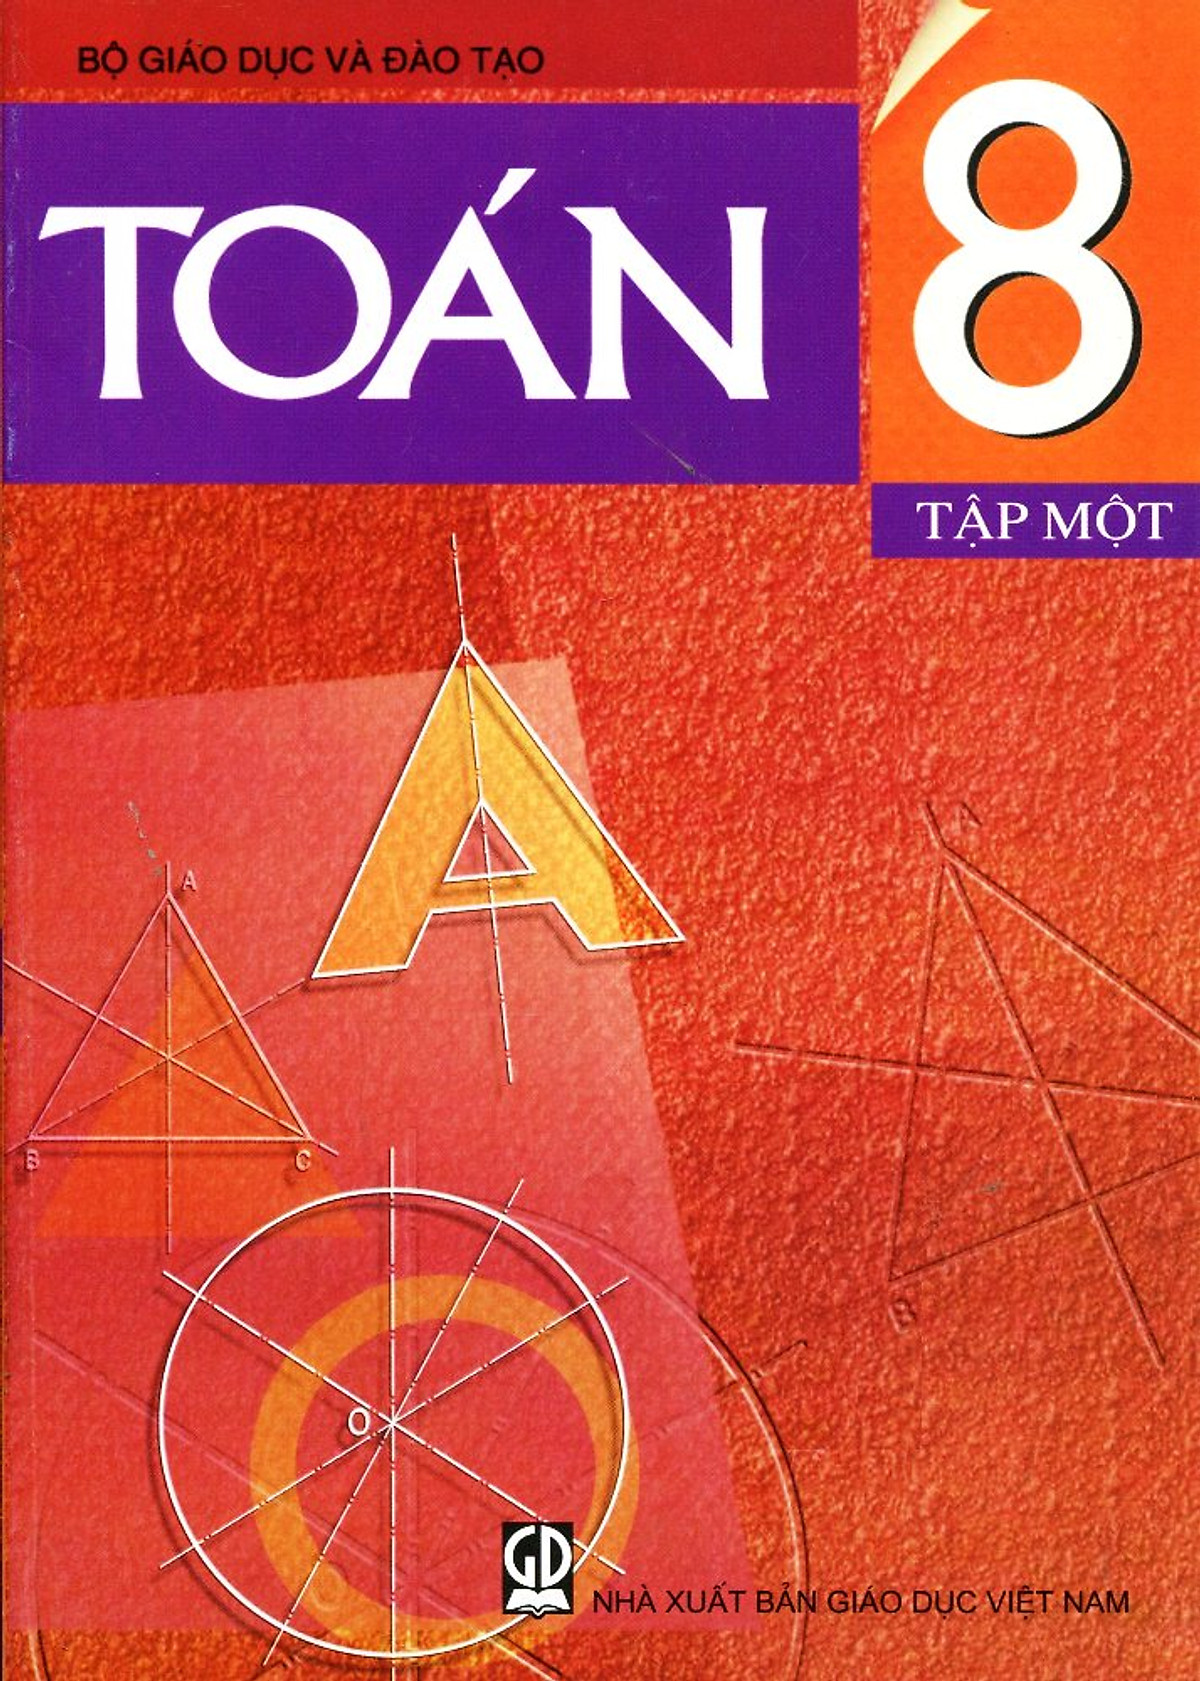 toan-8-tap-1-516